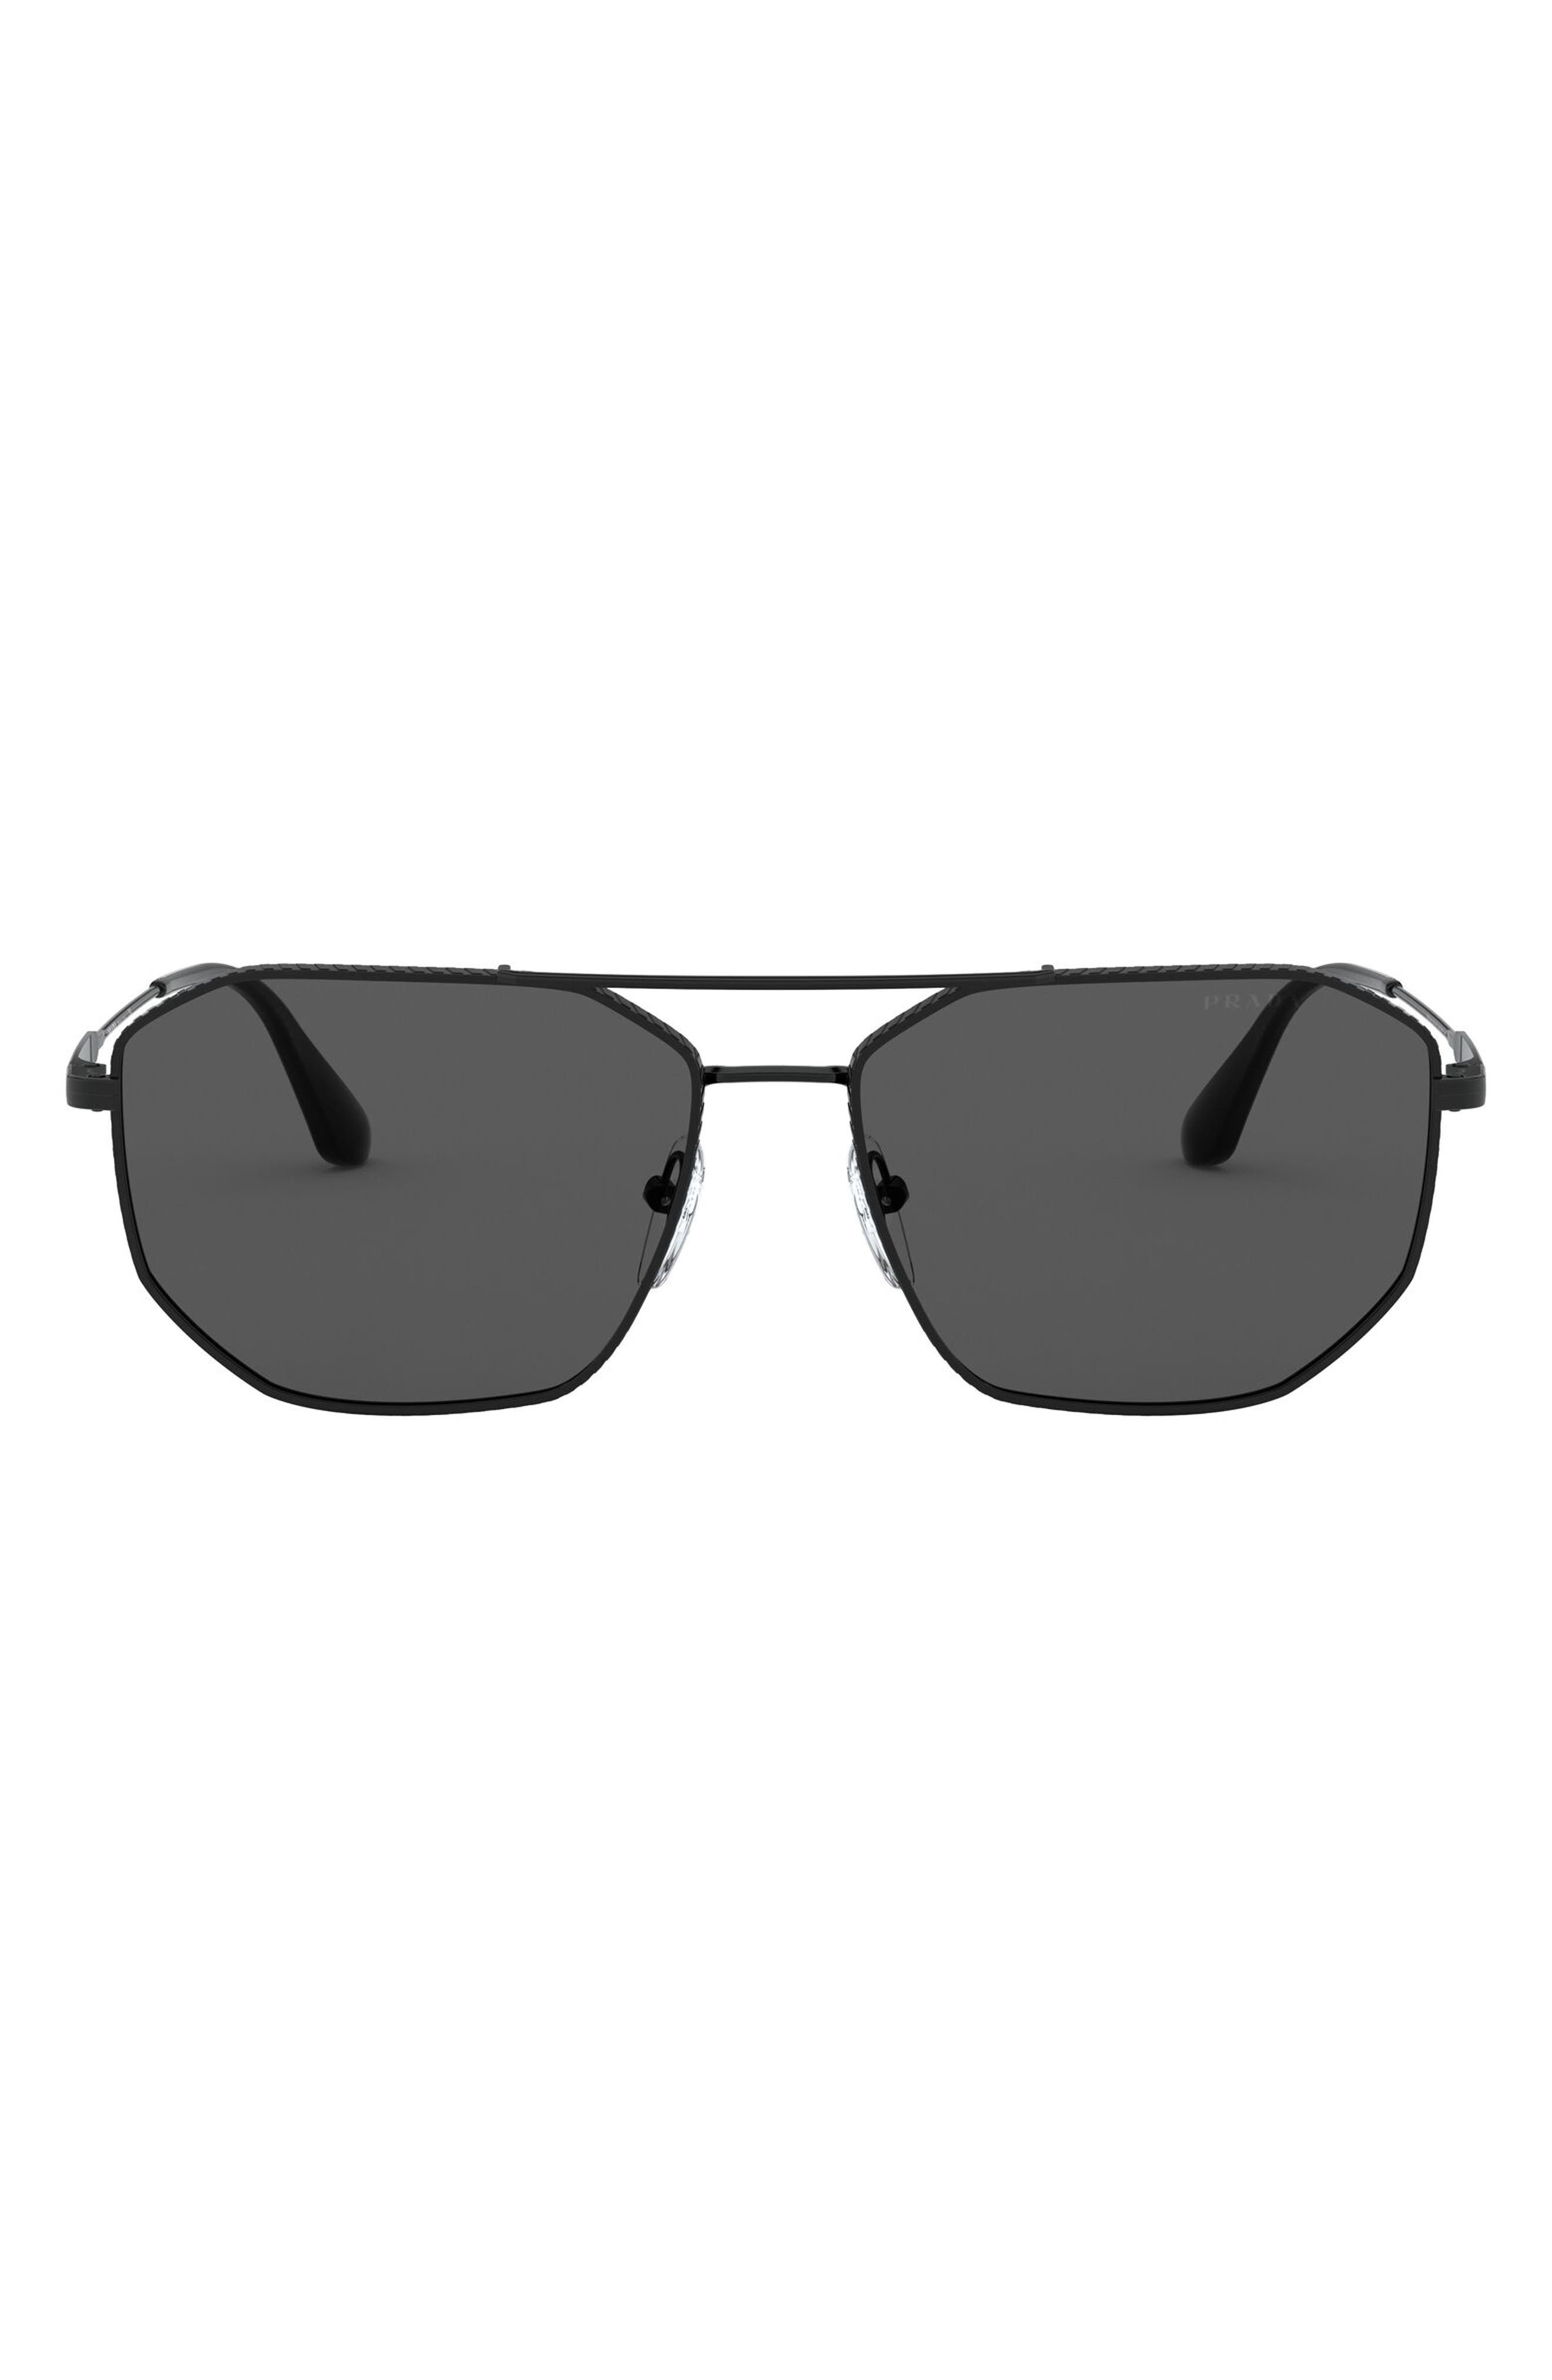 elite sunglasses prada price